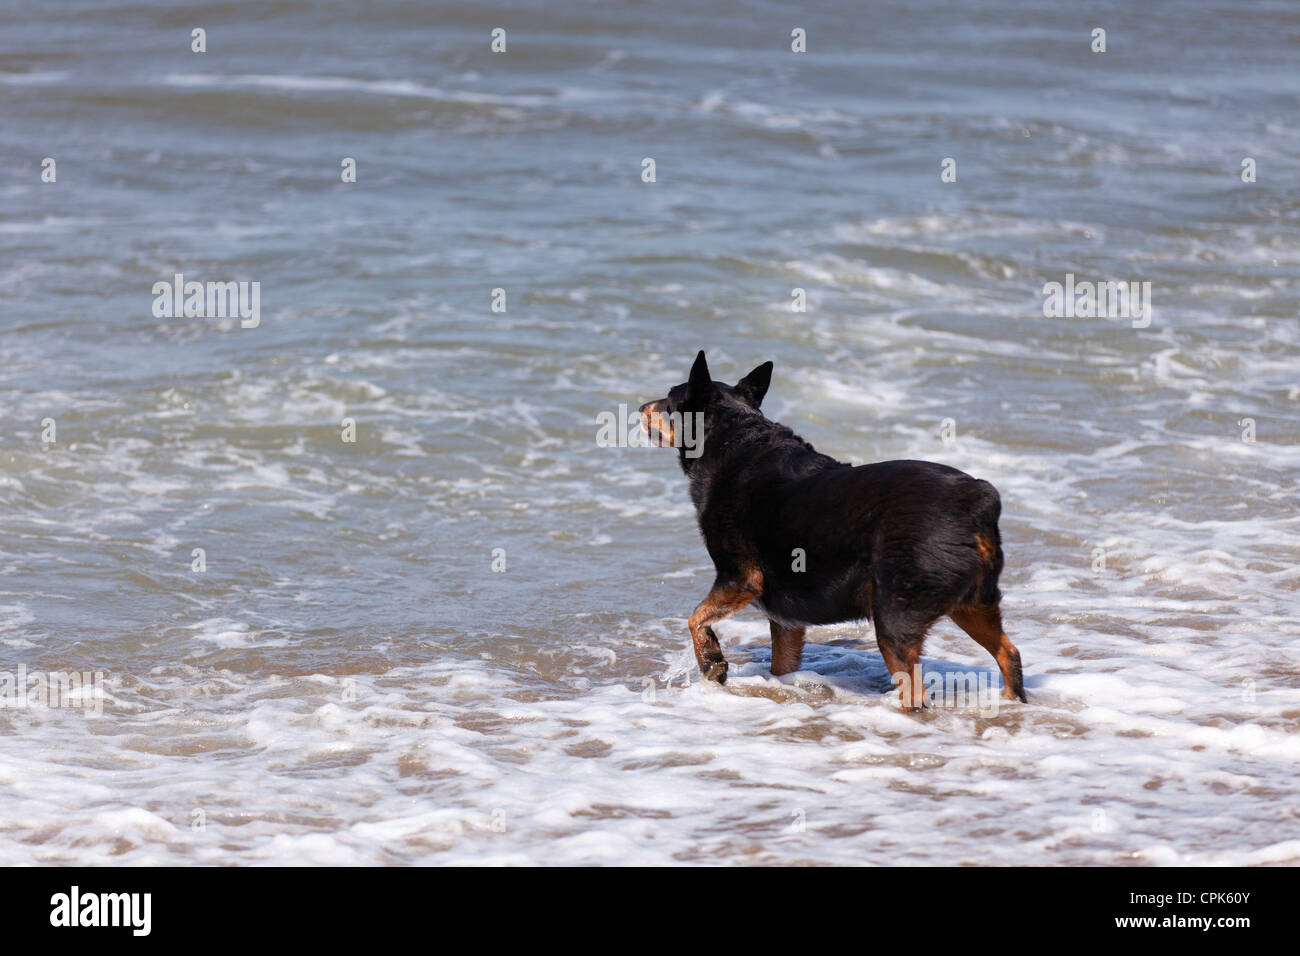 A large black dog walking on the beach Stock Photo